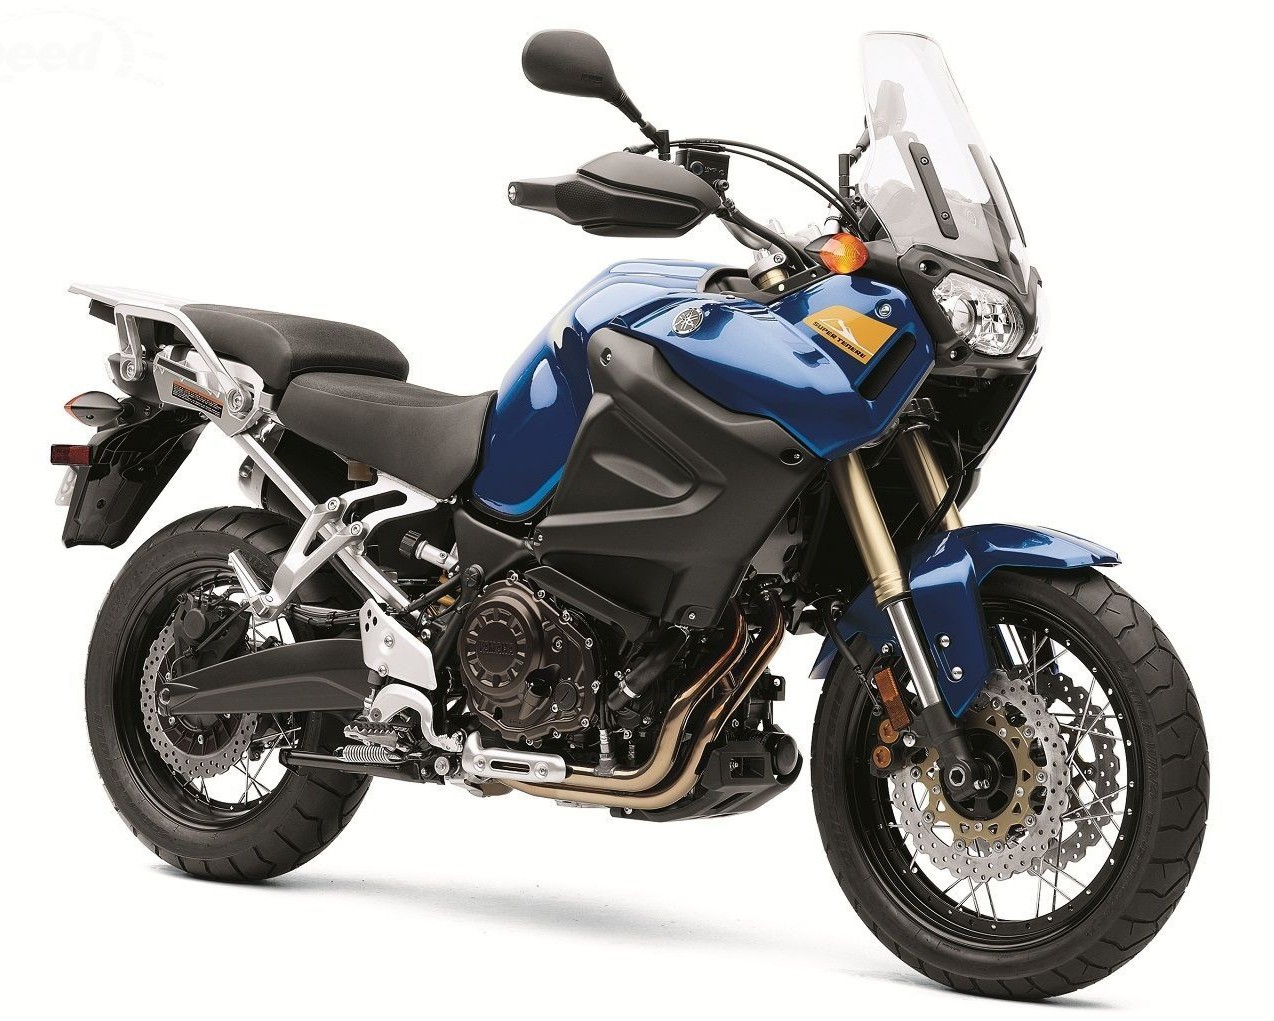 Yamaha XT 1200Z Super Ténéré For Sale Specifications, Price and Images